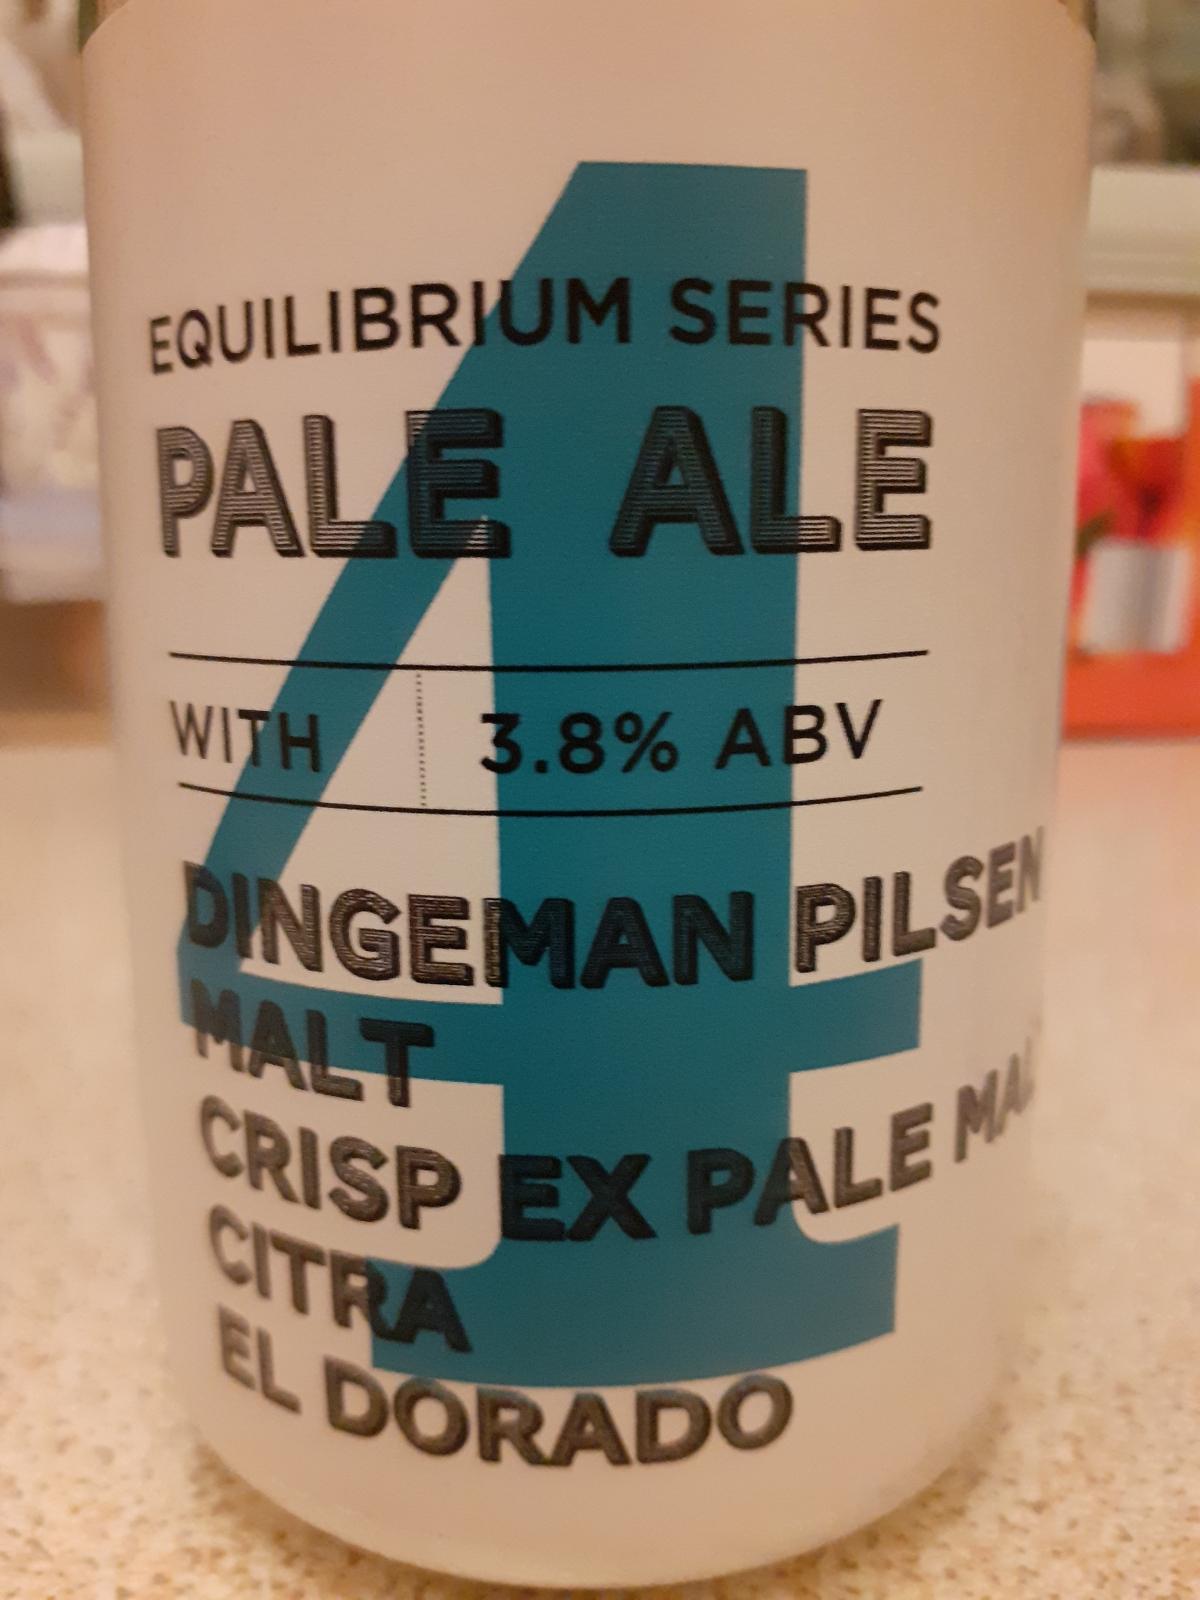 Equilibrium Series: Pale Ale #4